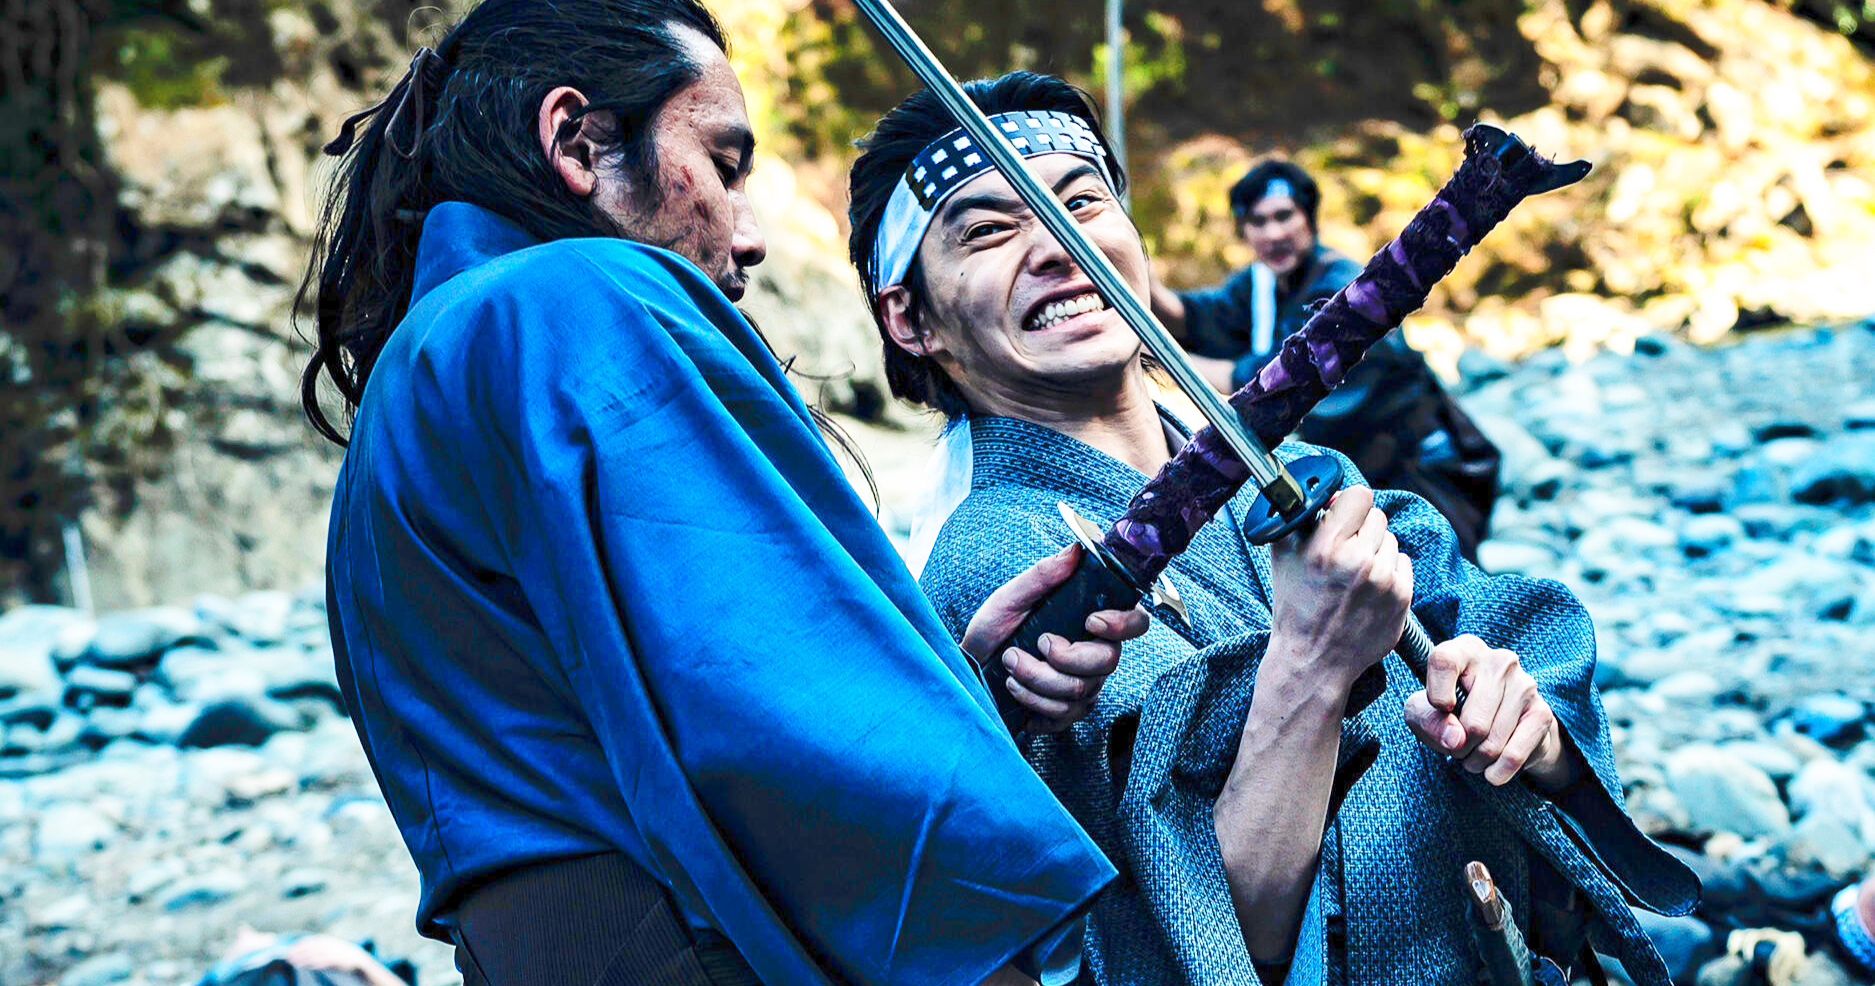 Crazy Samurai Has an Epic 77-Minute Single-Take Martial Arts Action Scene